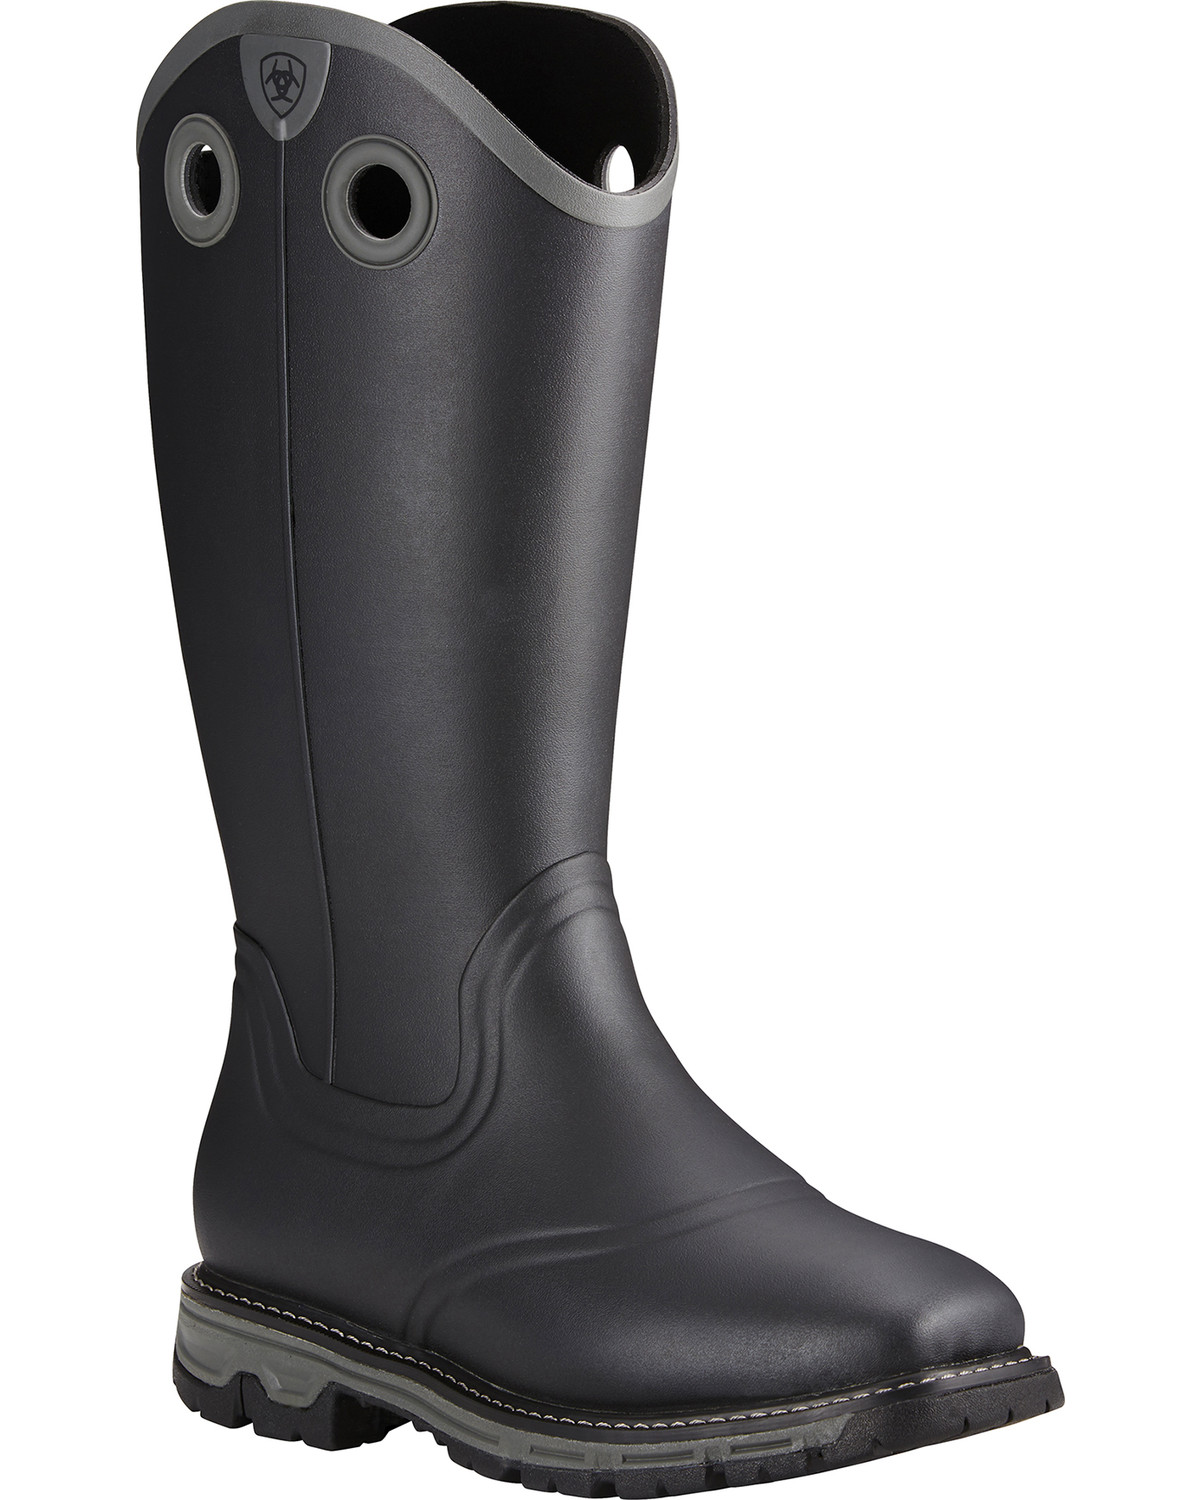 ariat rain boots